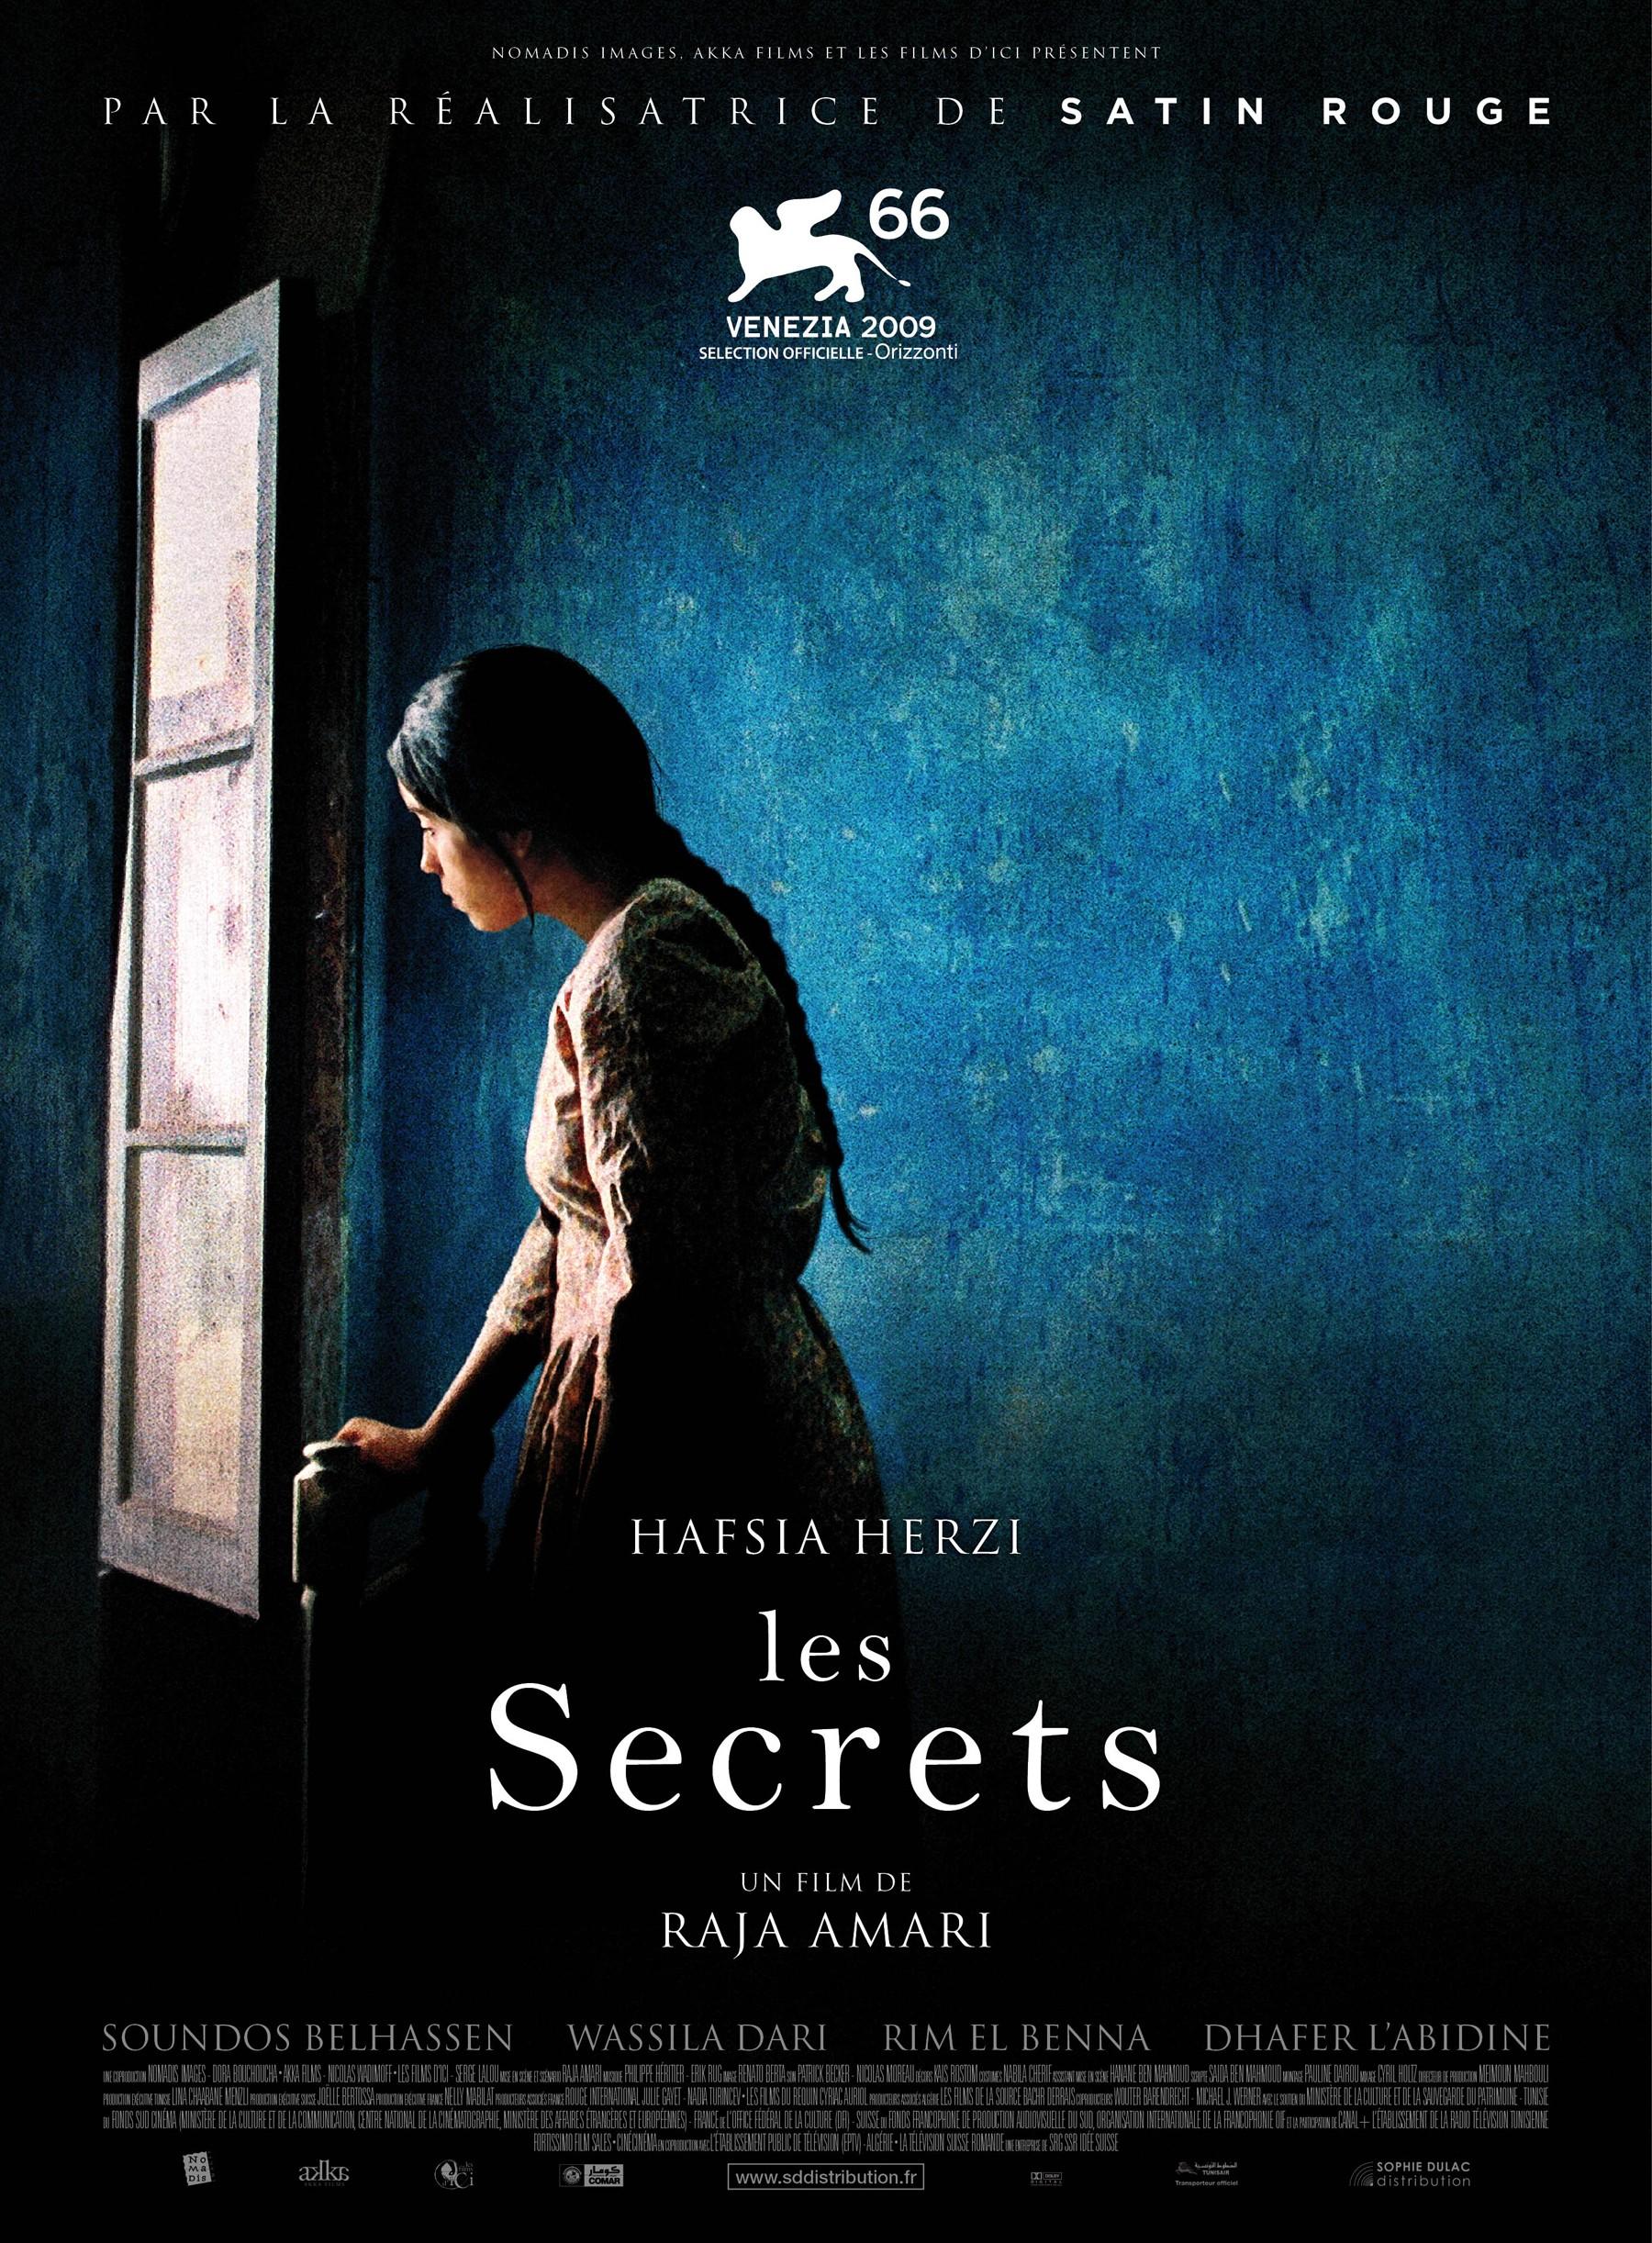 L'affiche du film de Raja Amari, "Les secrets" [Akka Films]